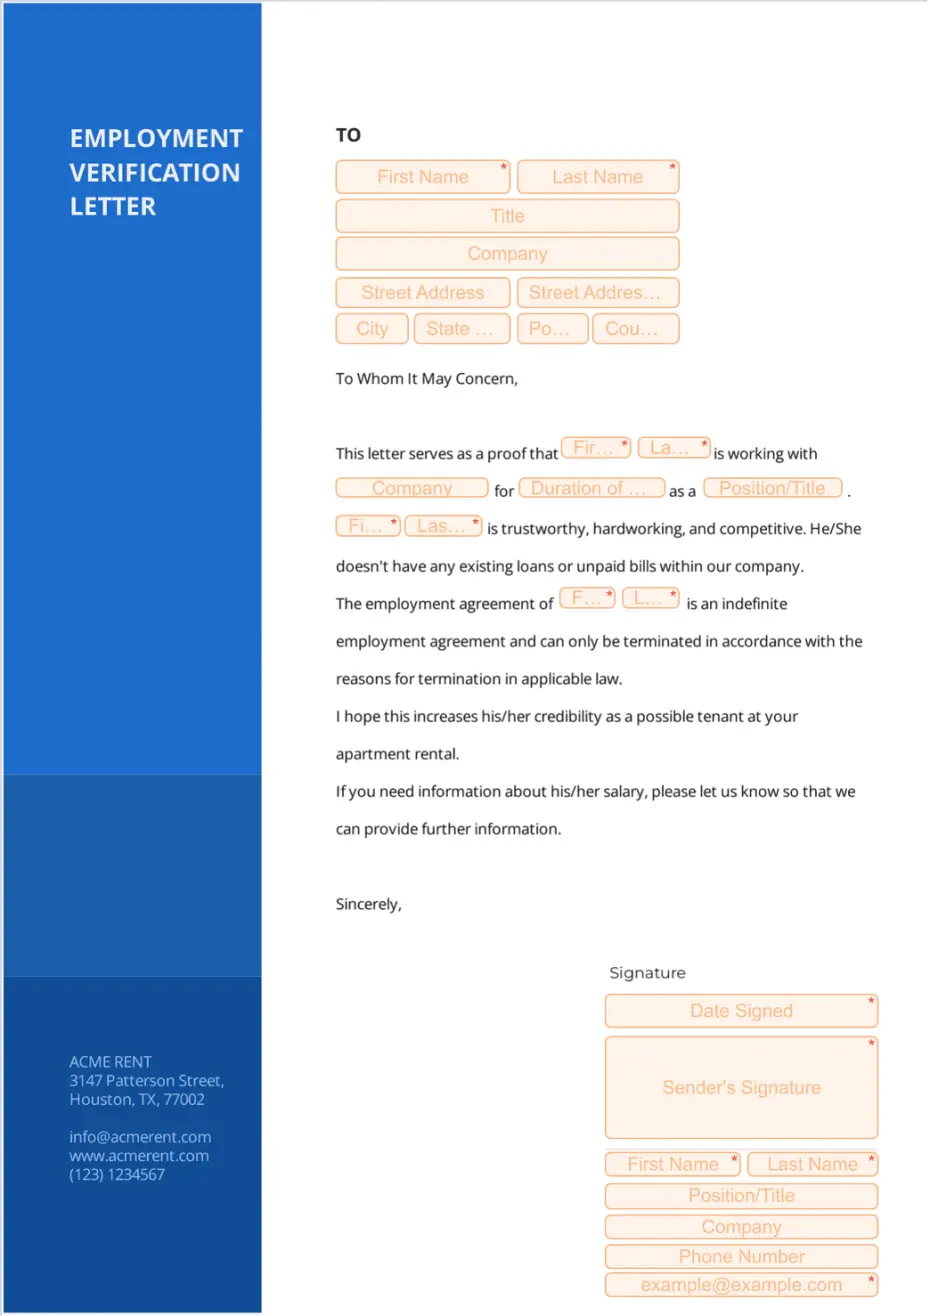 Employment Verification Letter for Apartment Rental